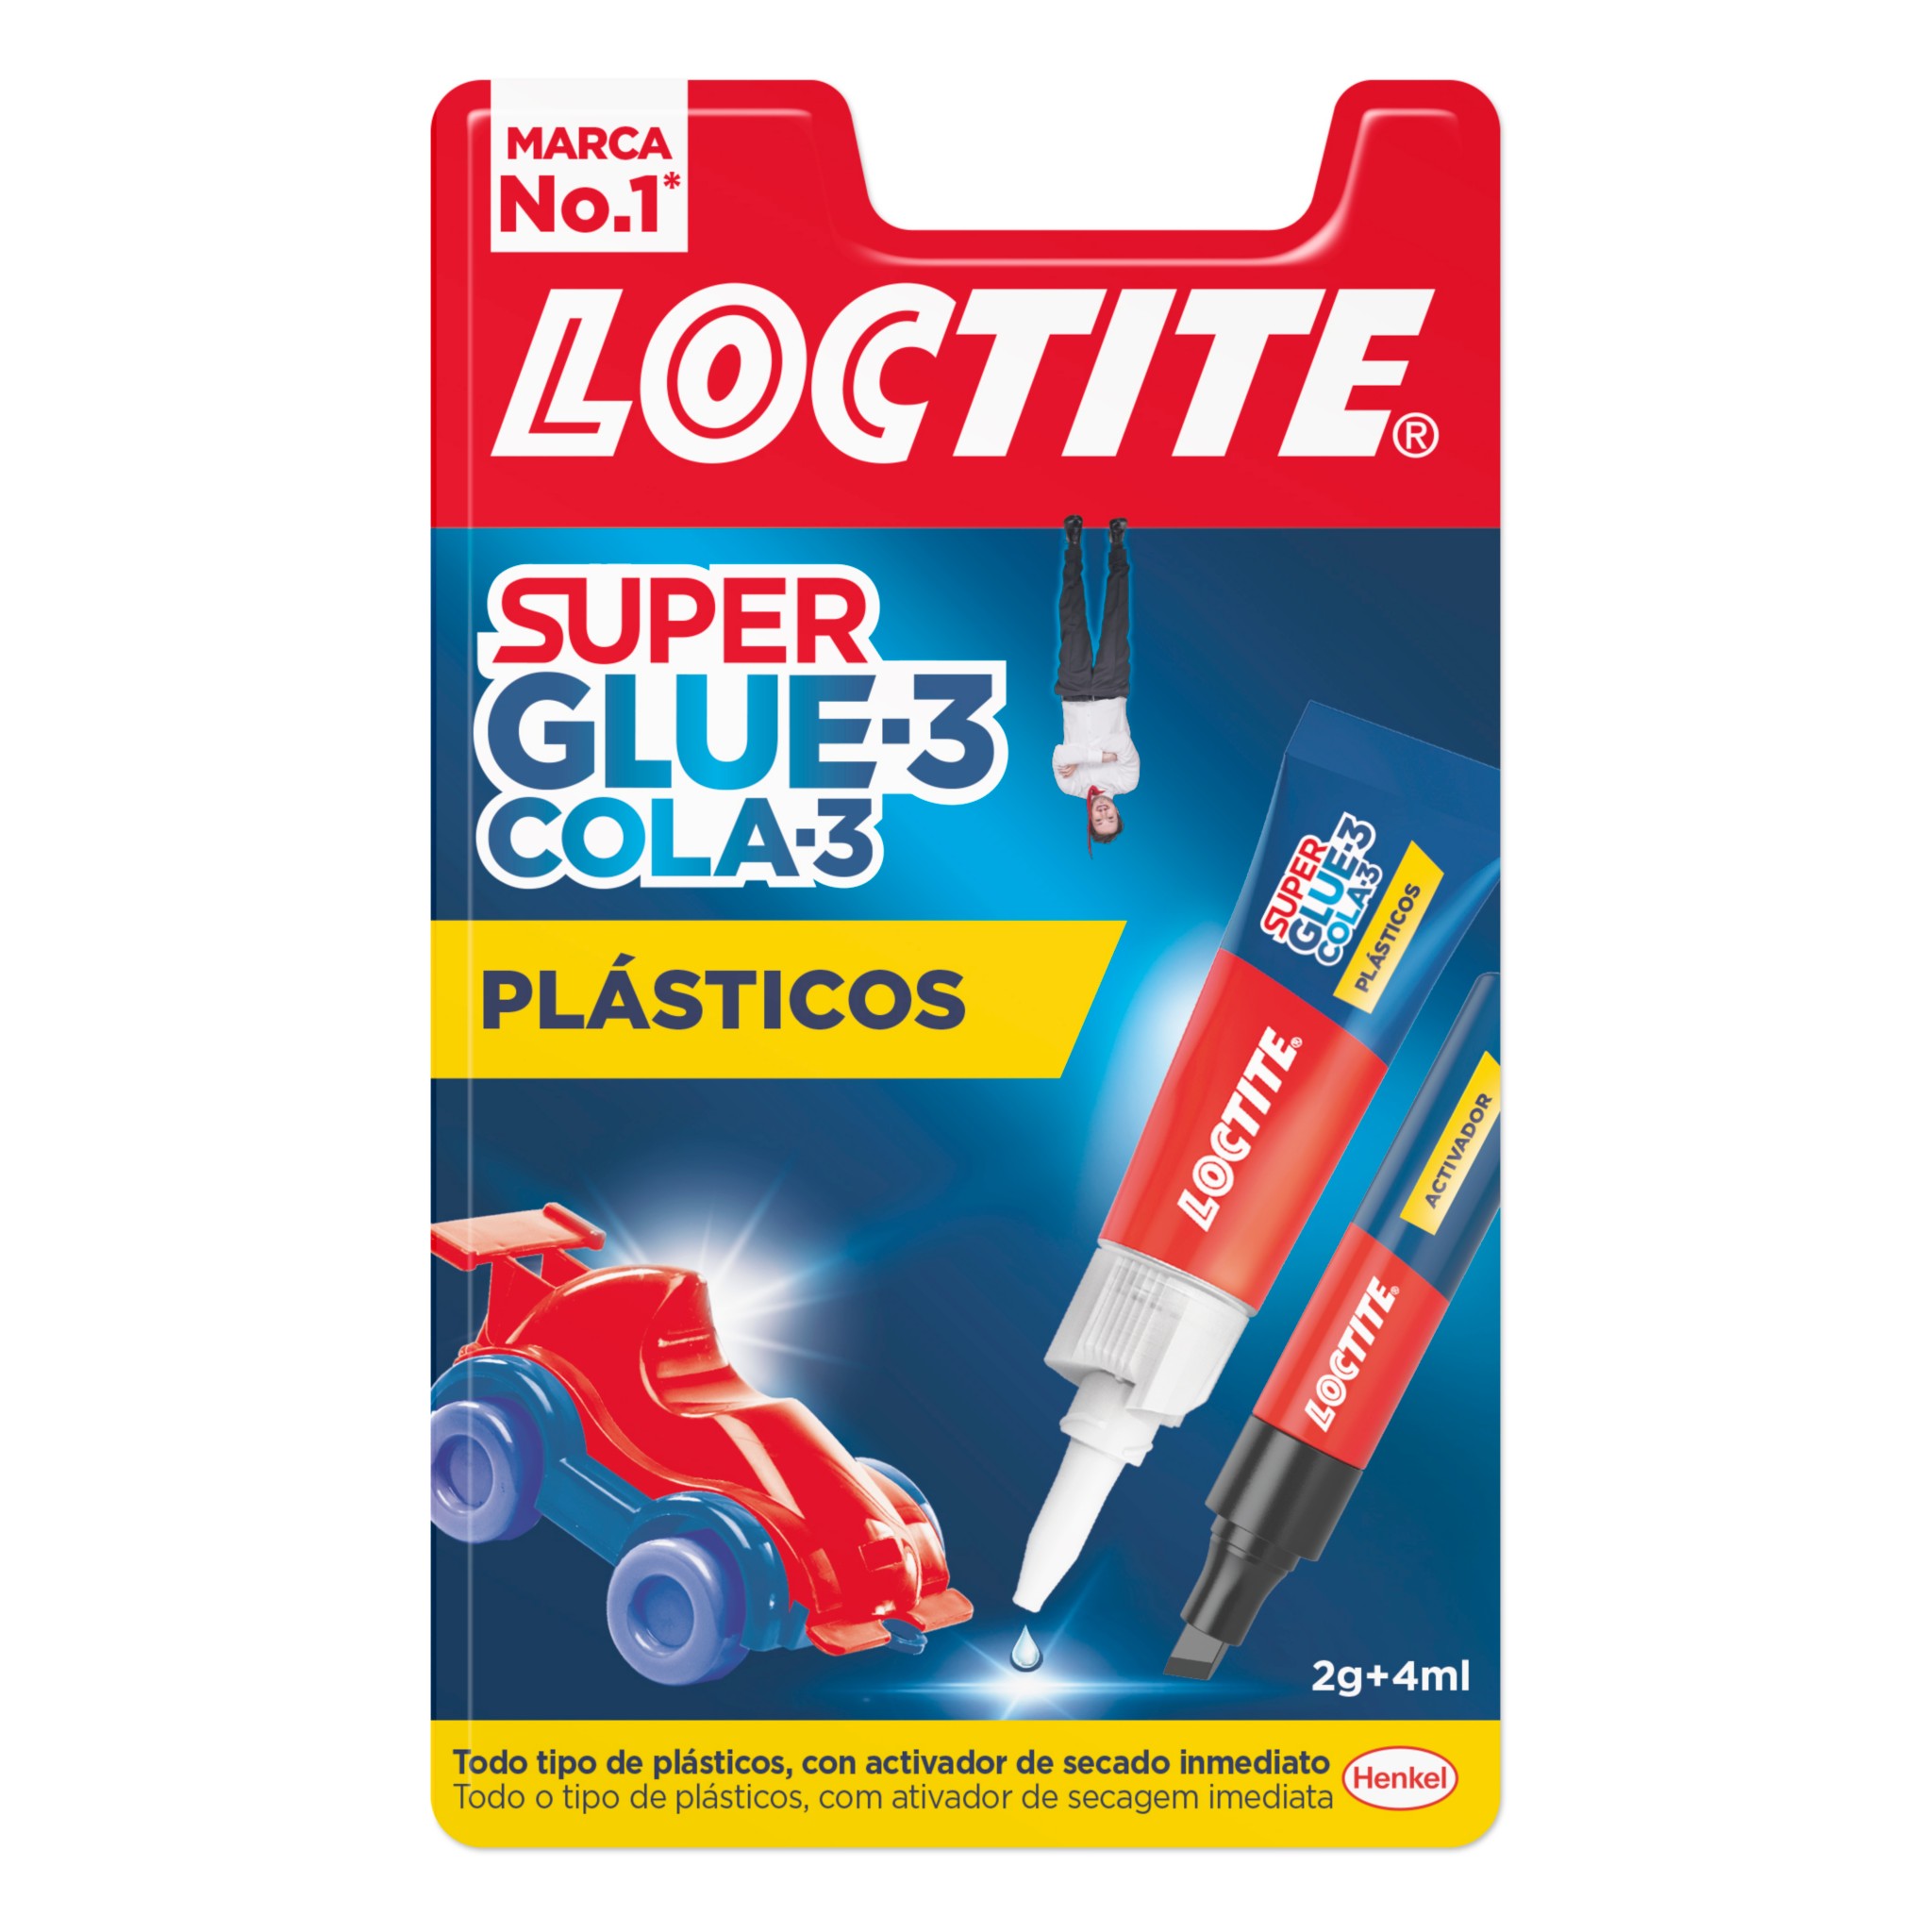 Pegamento Loctite Super Glue-3 precisión